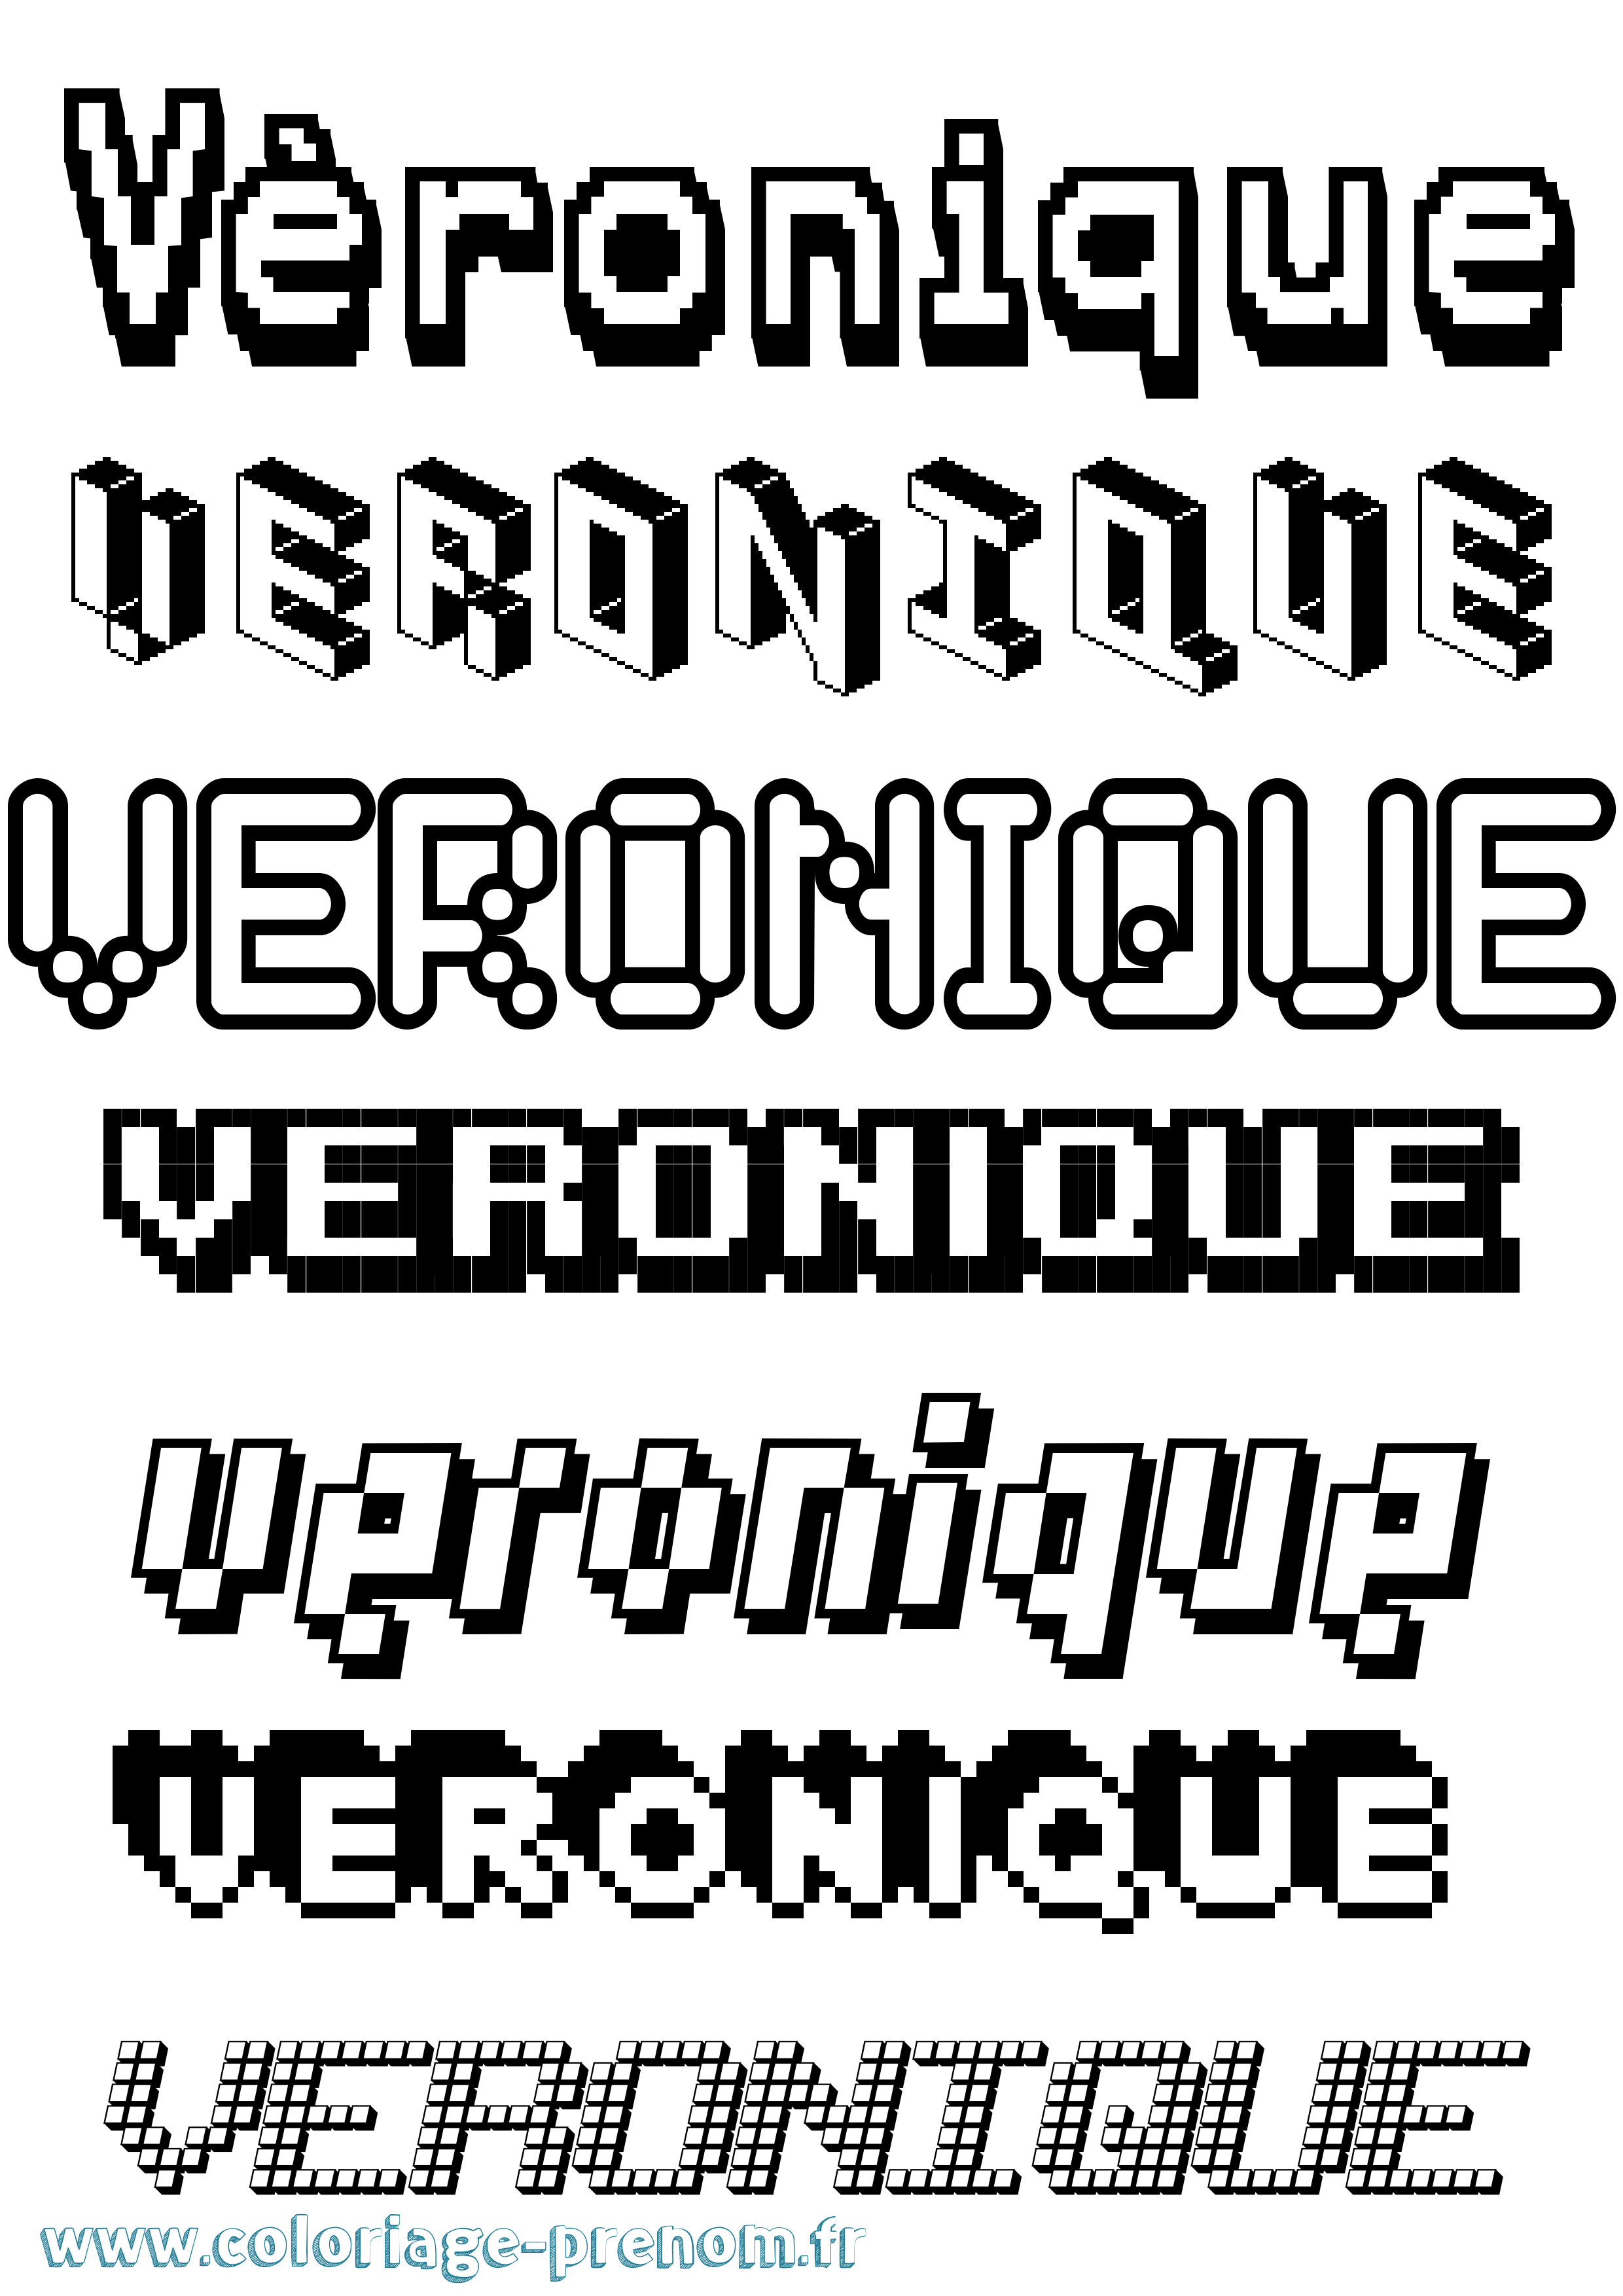 Coloriage prénom Véronique